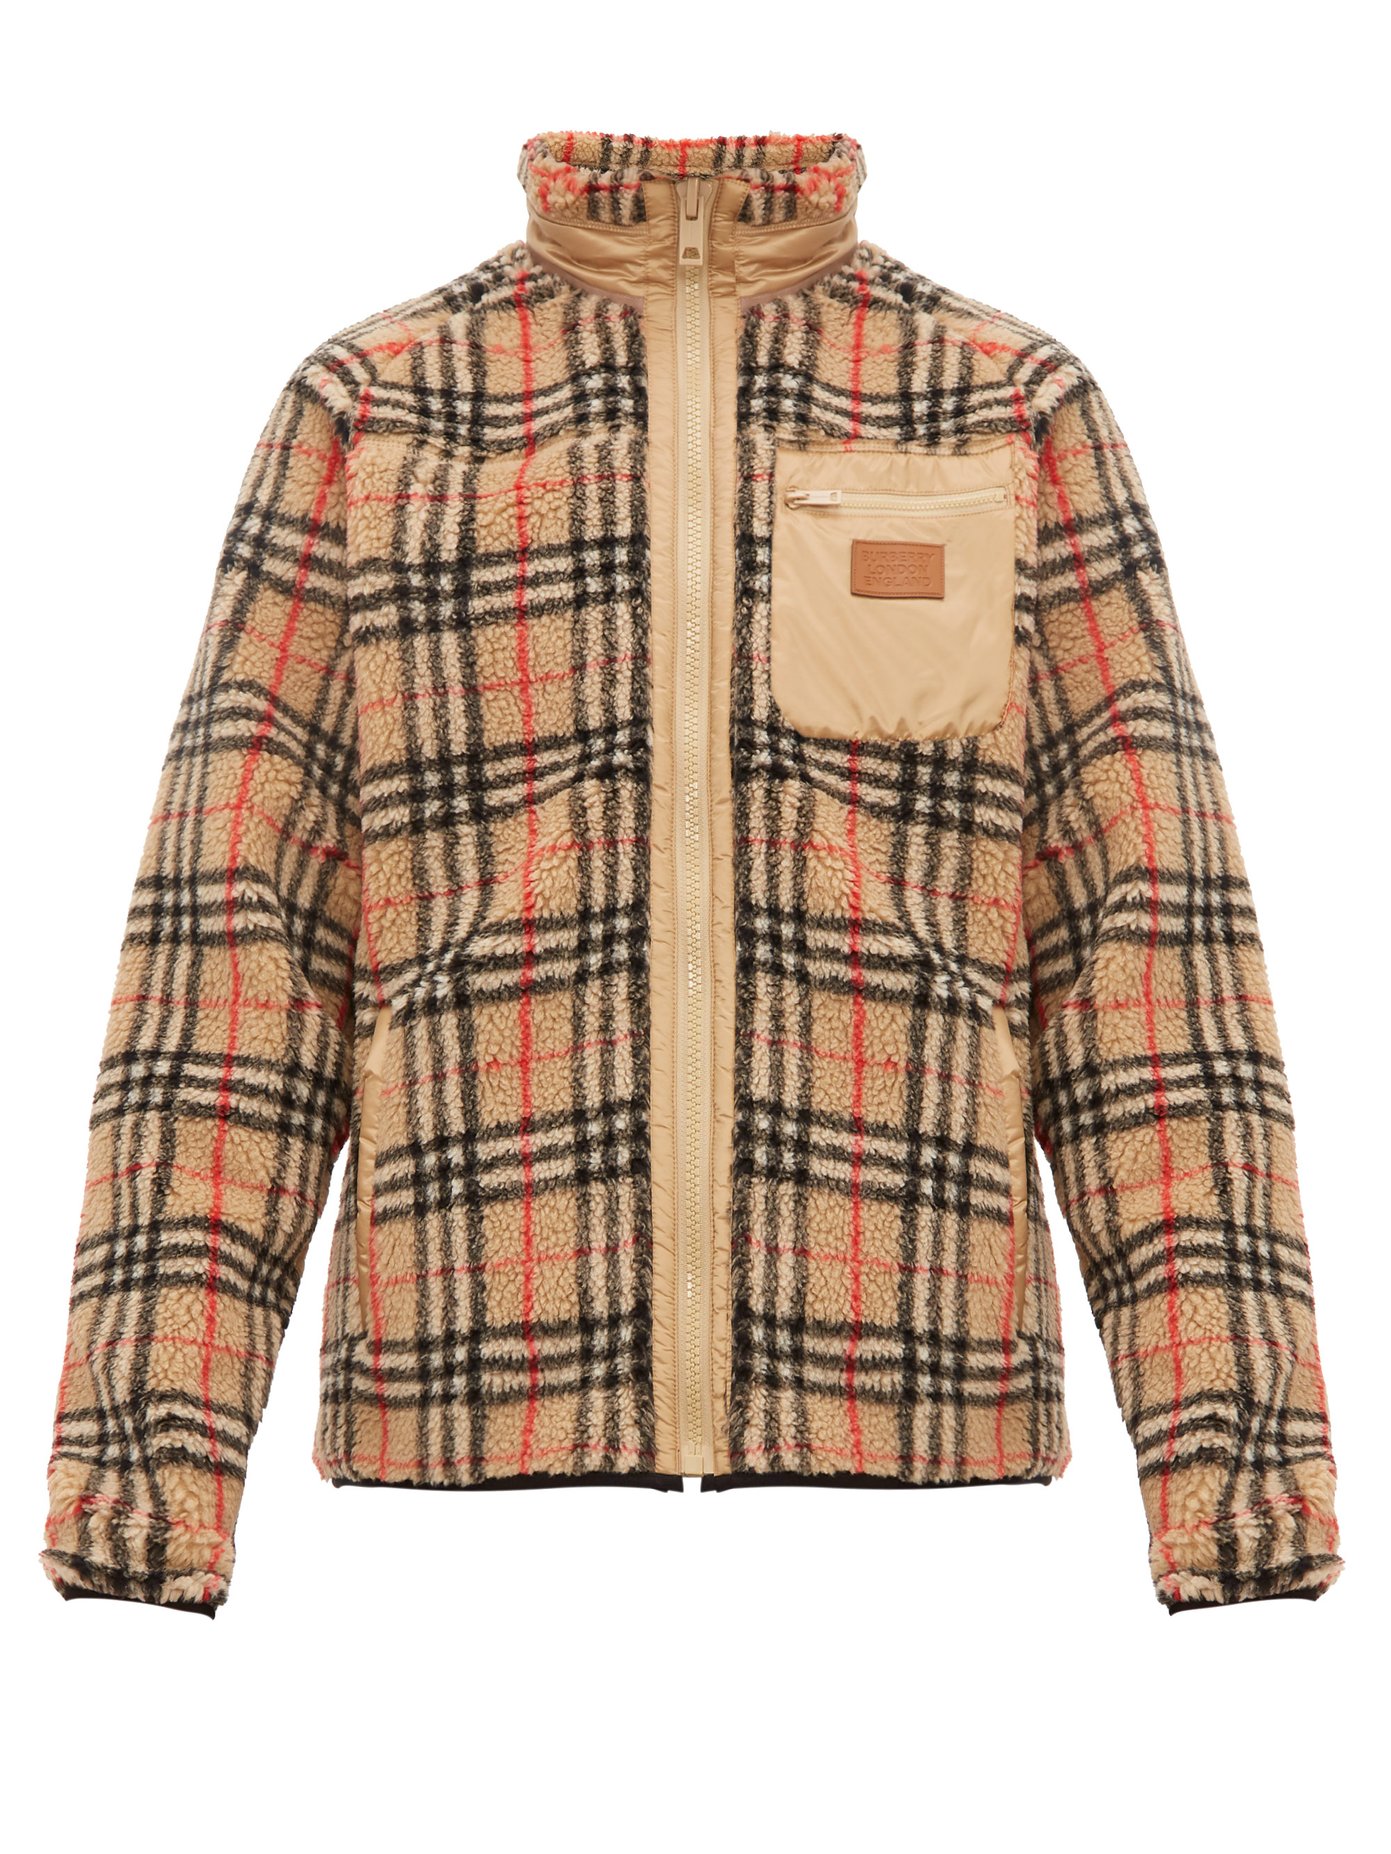 burberry check jacket